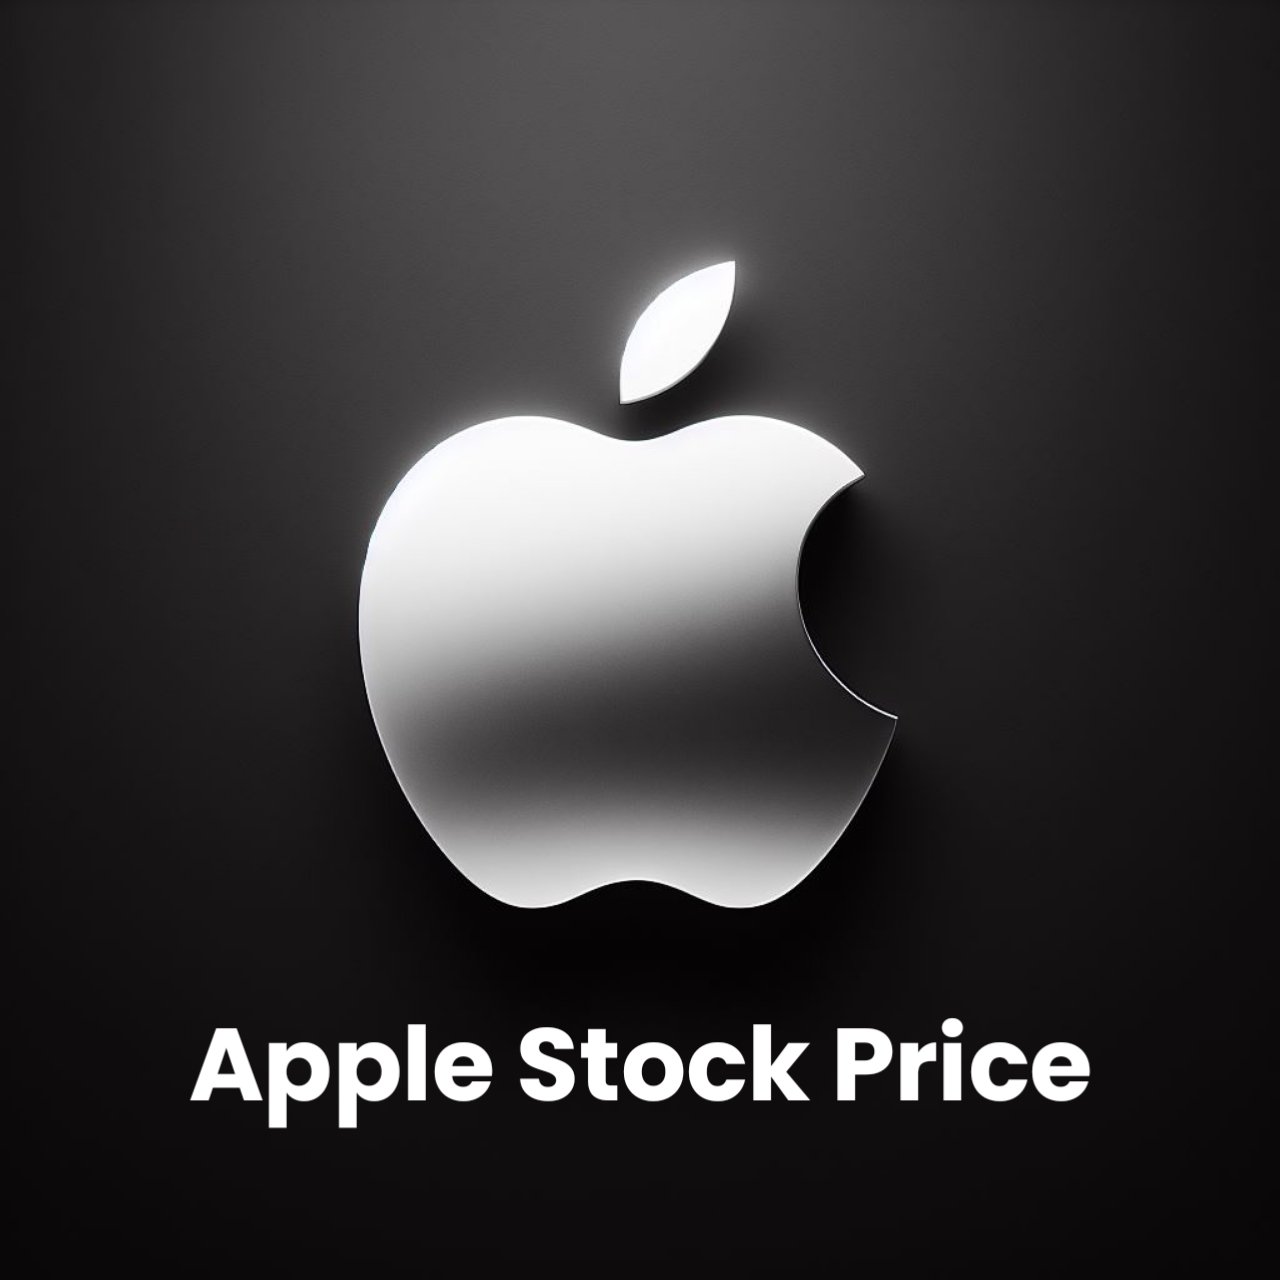 Apple stock price prediction